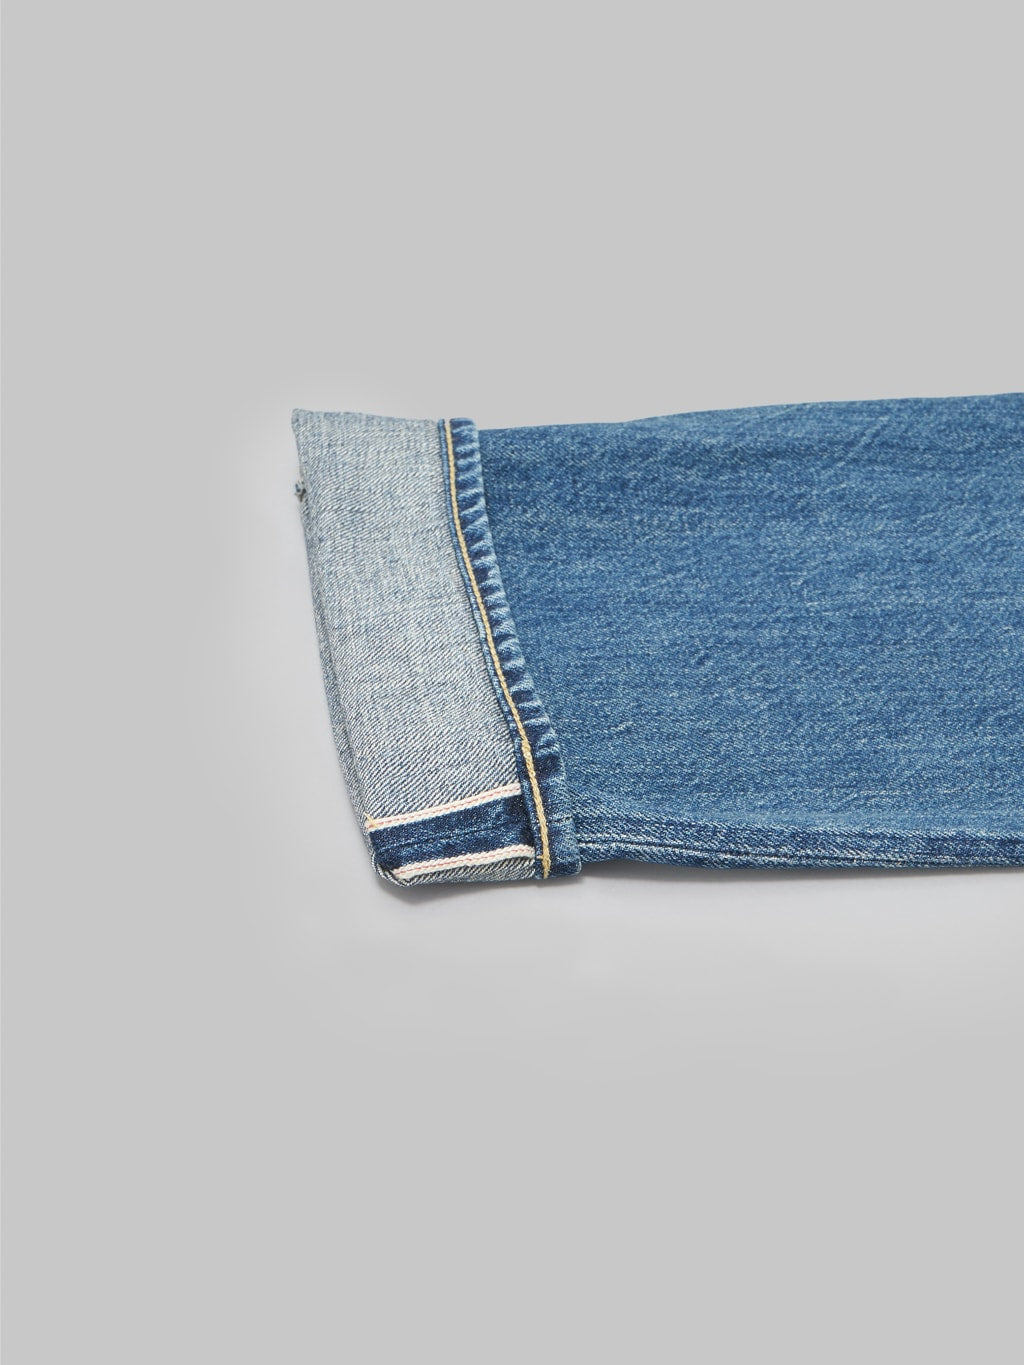 Studio D'Artisan D1844U "1950s Wash" 12.5oz Regular Straight Jeans